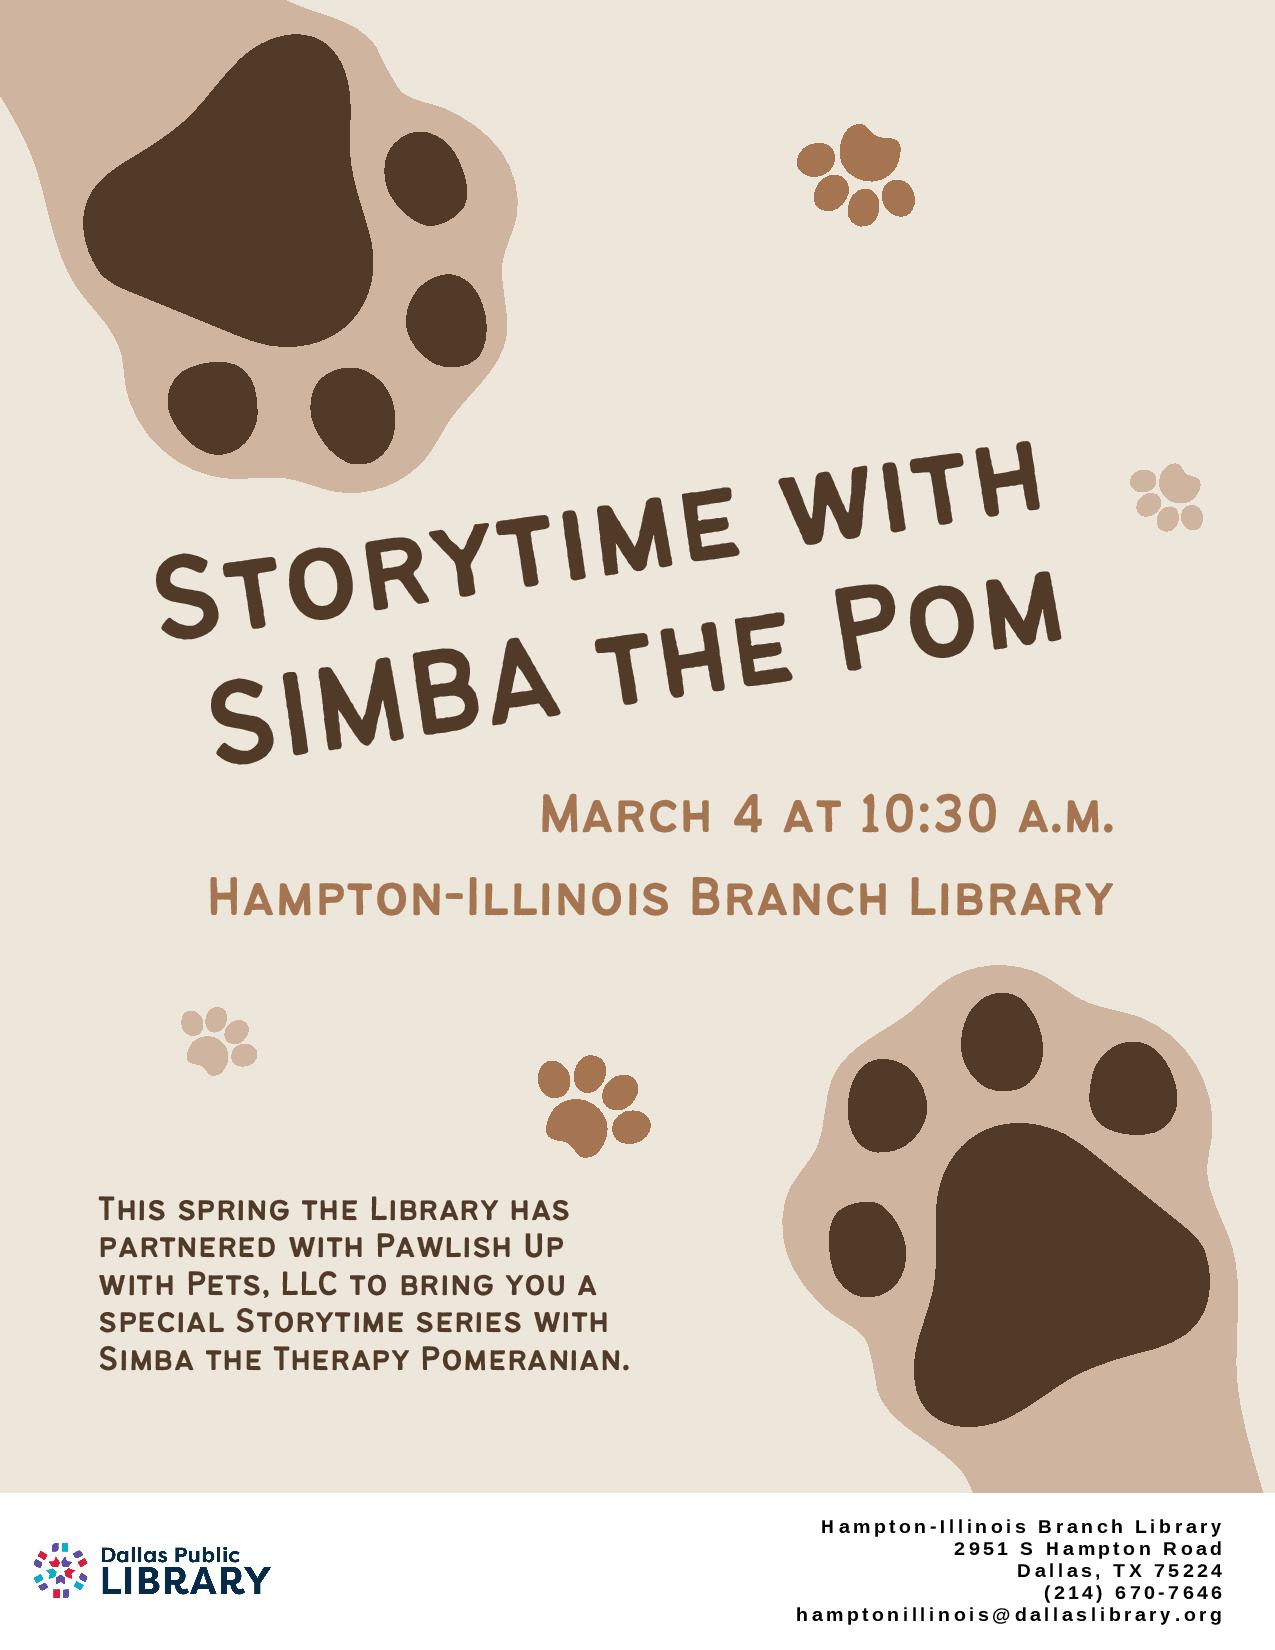 Storytime with SIMBA